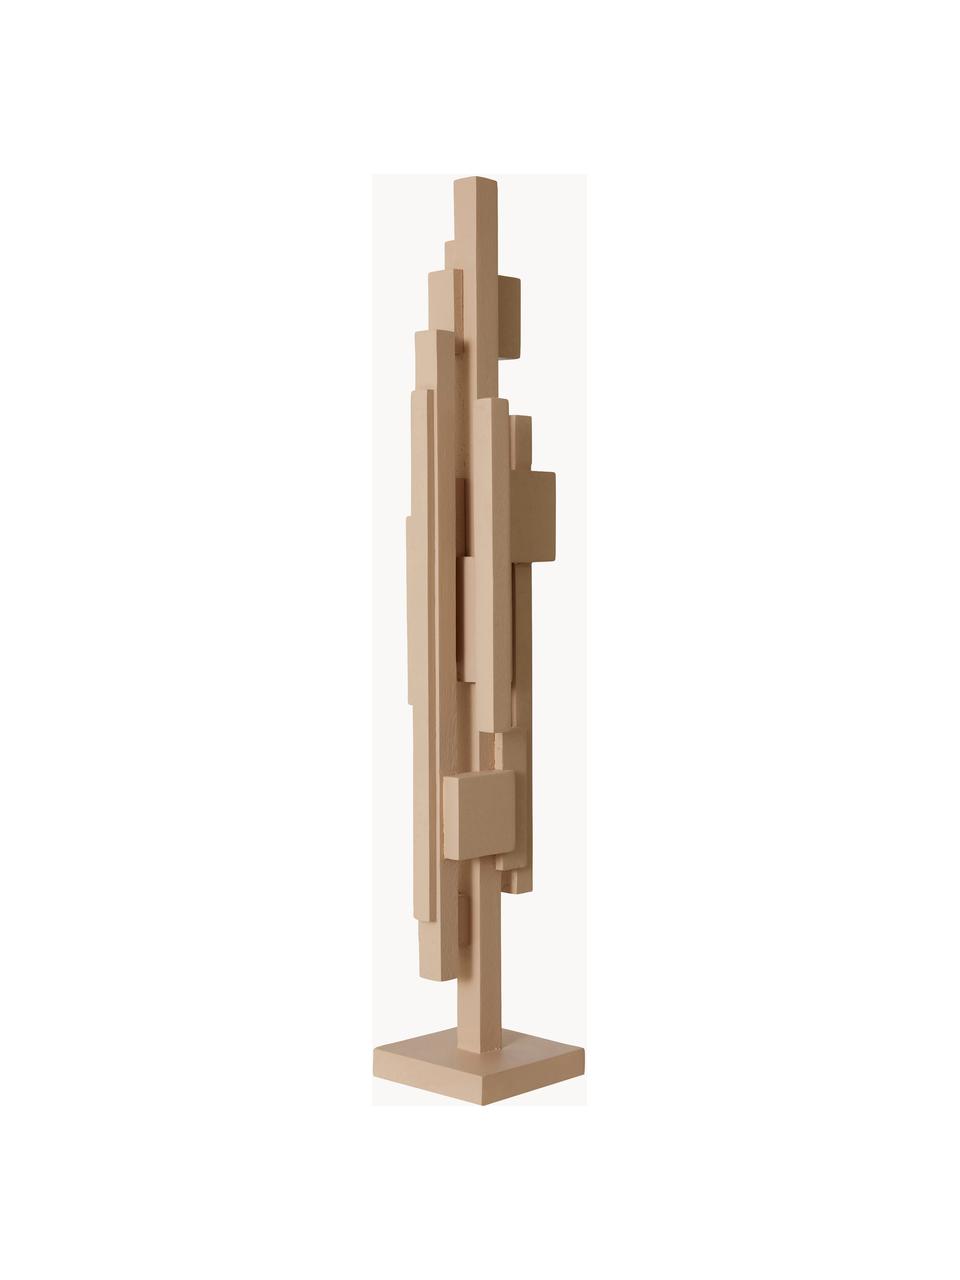 Objet décoratif artisanal en bois de teck Skyline, Bois de teck, Bois de teck, larg. 9 x prof. 42 cm